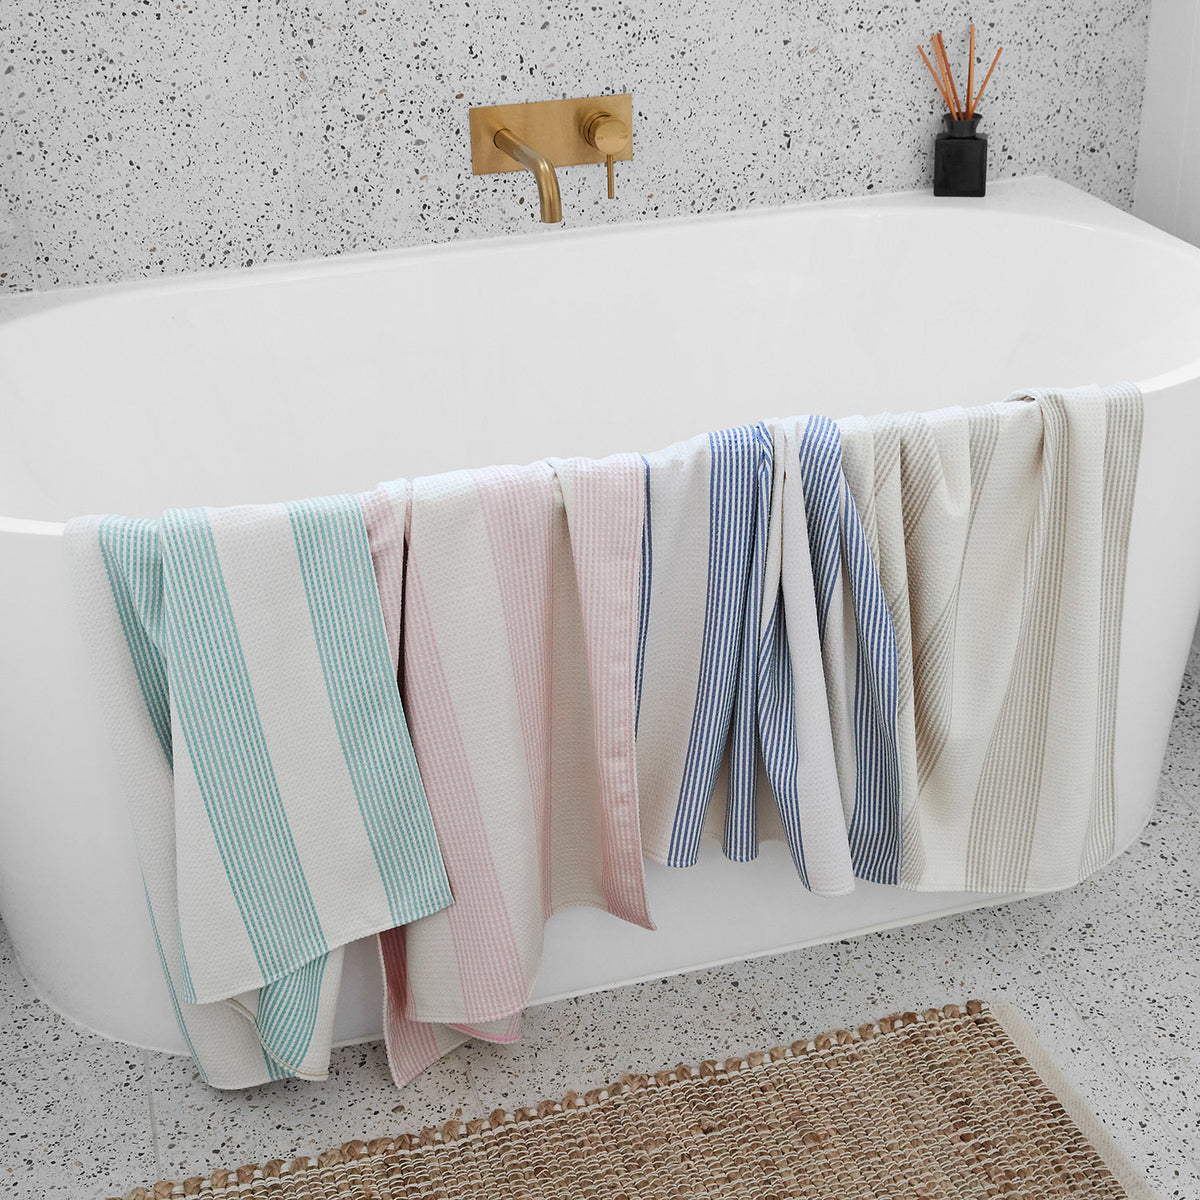 Dock & Bay Bath Towels - Primrose Pink